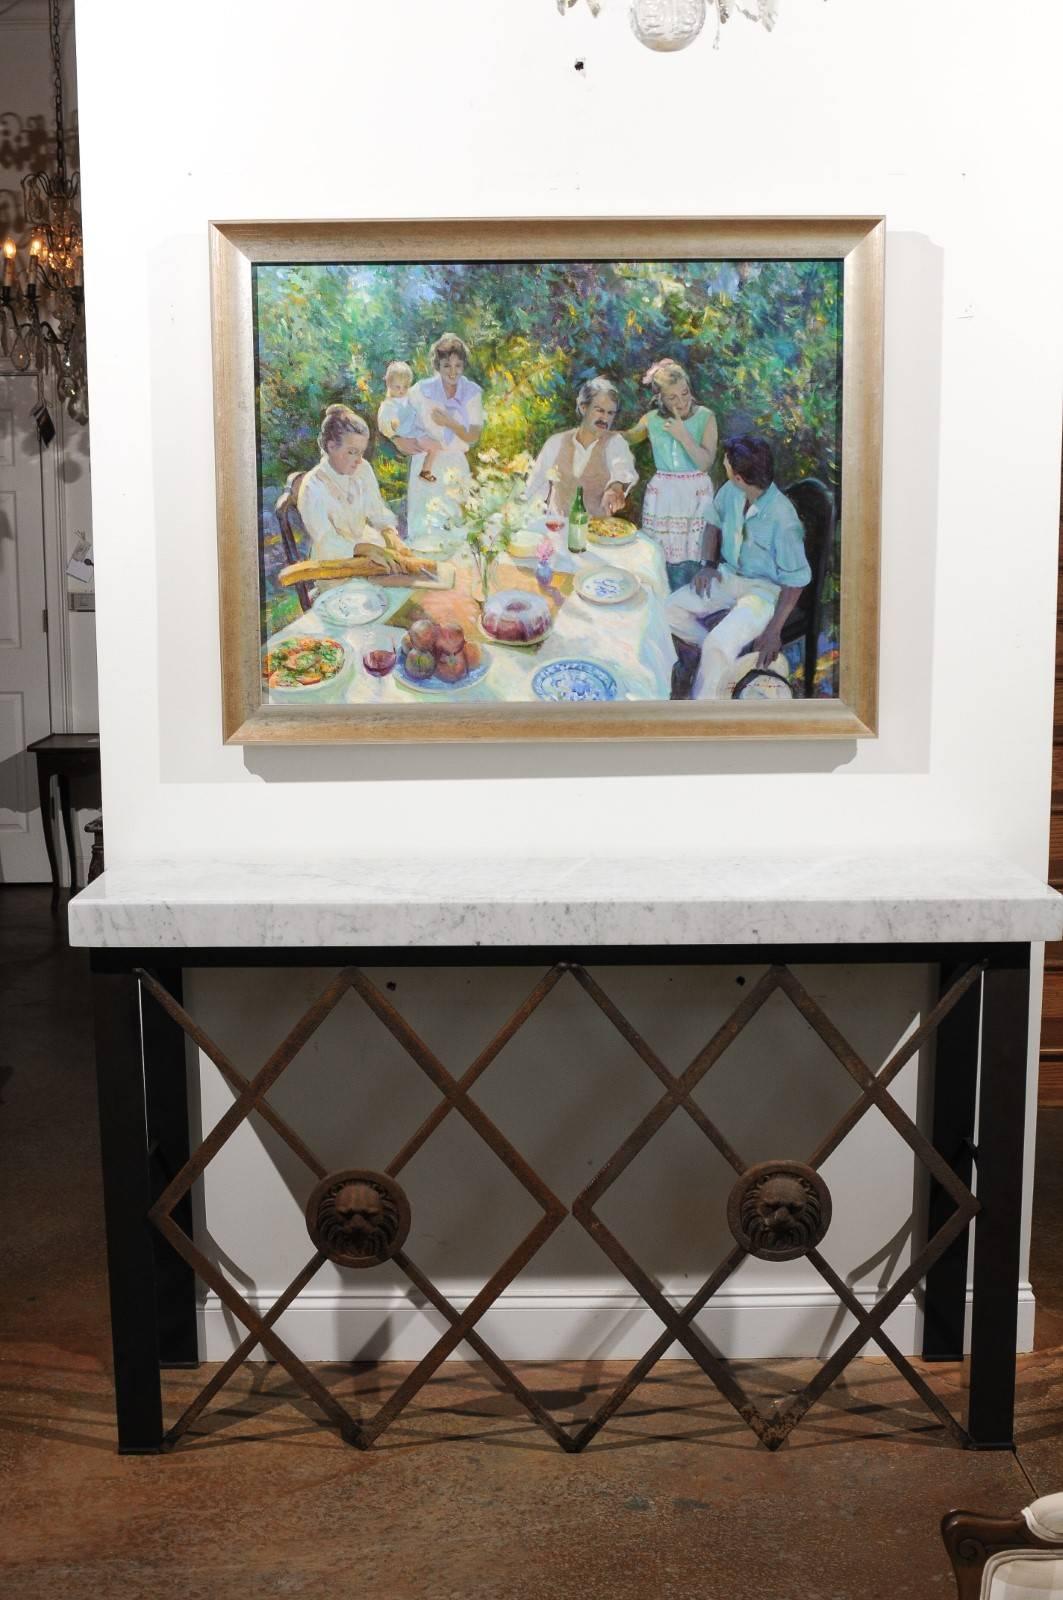 Family Joy, Don Hatfield Contemporary Framed Garden Oil on Linen Painting LiL 2